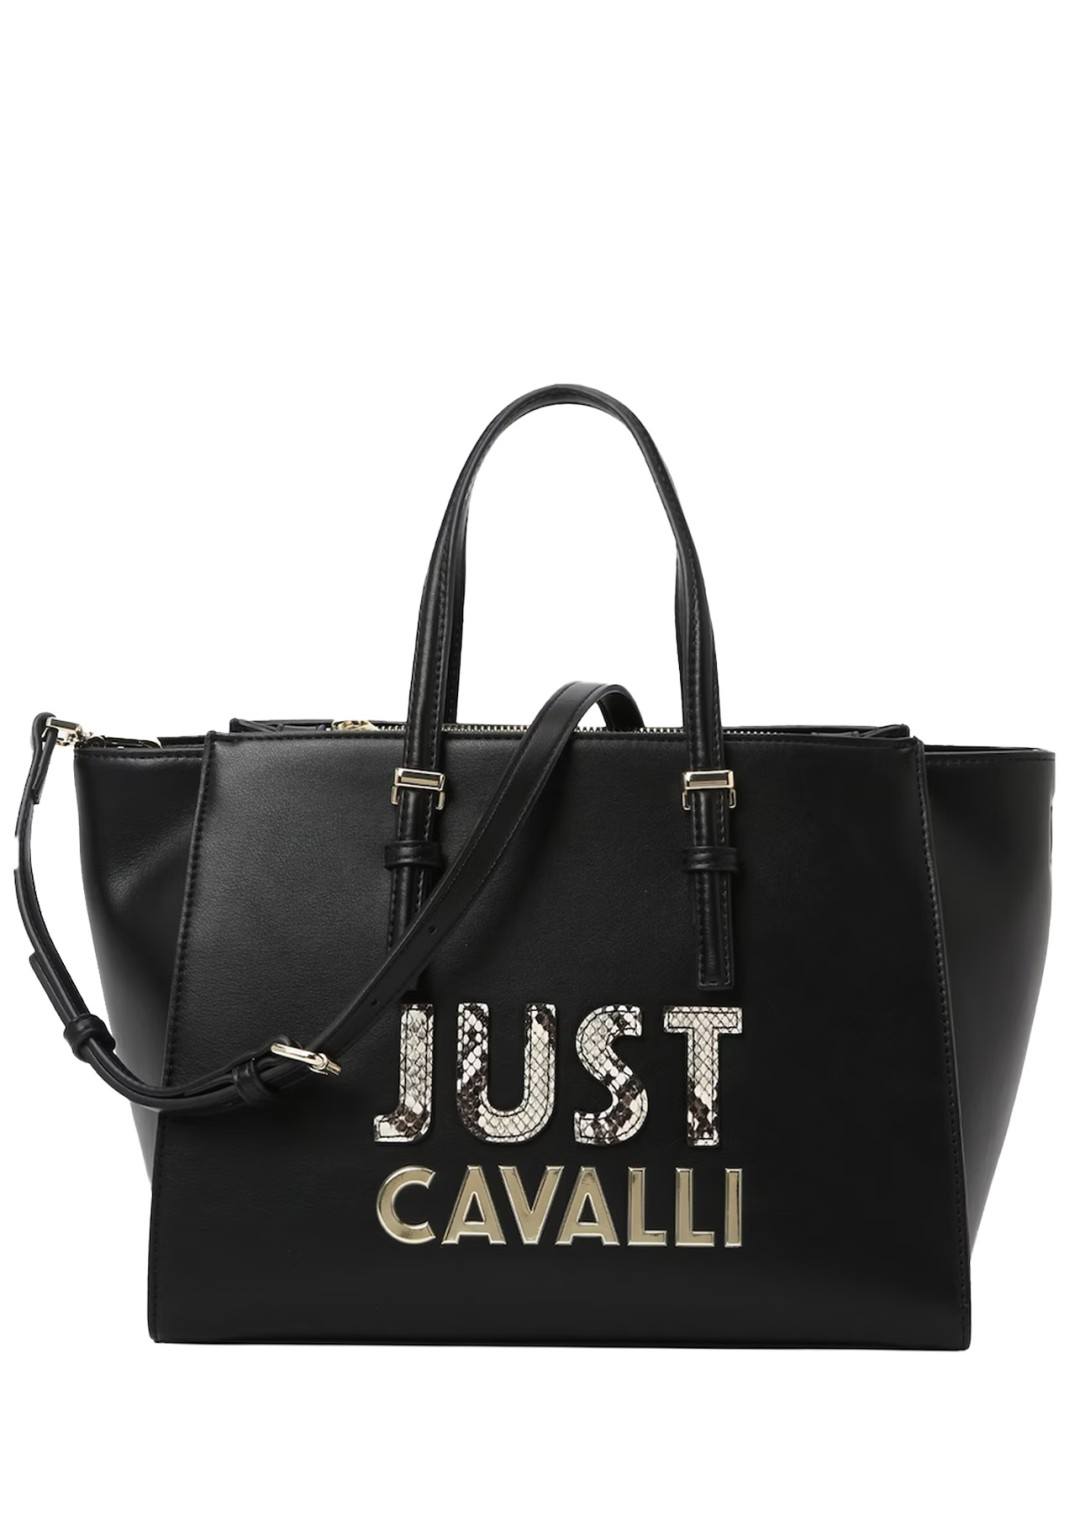 Just Cavalli - Borsa Scritta - Donna - 76RA4BC7 899